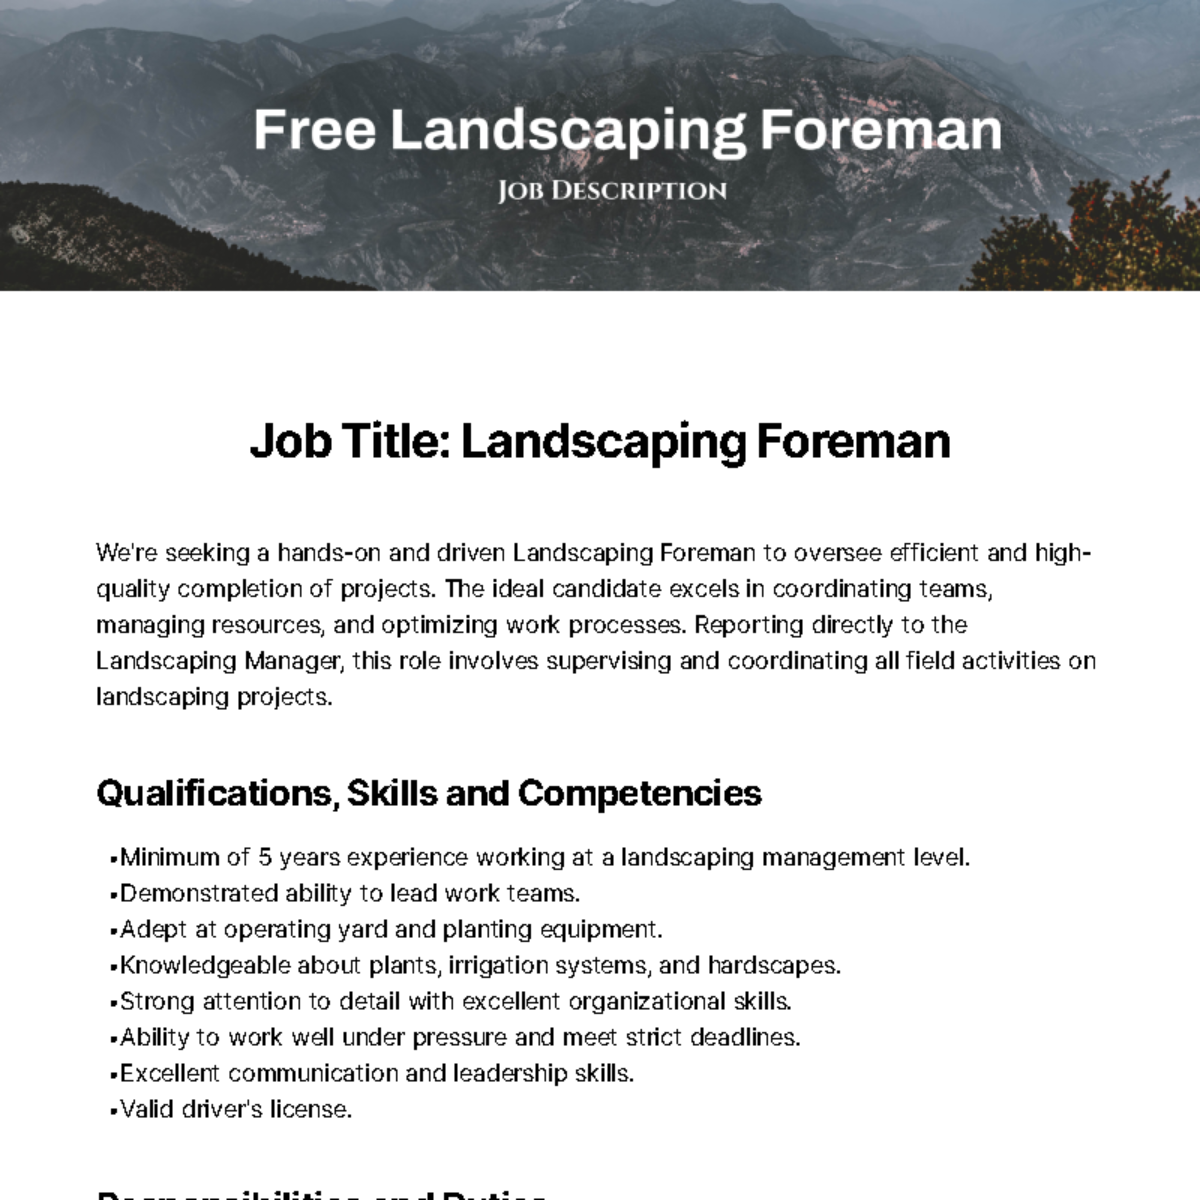 Free Landscaping Foreman Job Description Template